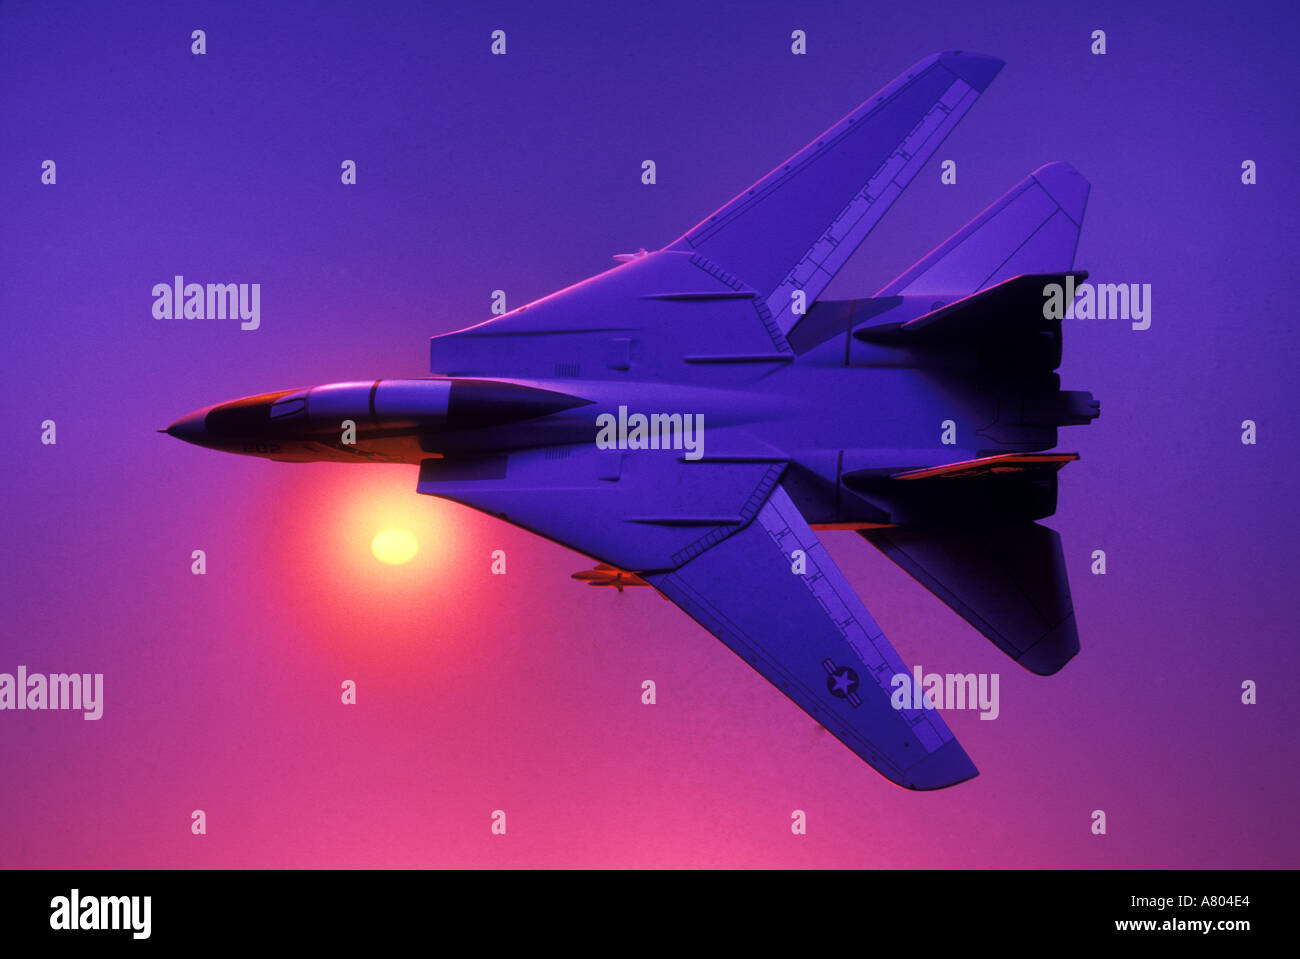 F 14 Tom Cat jet fighter aircraft model Stock Photo